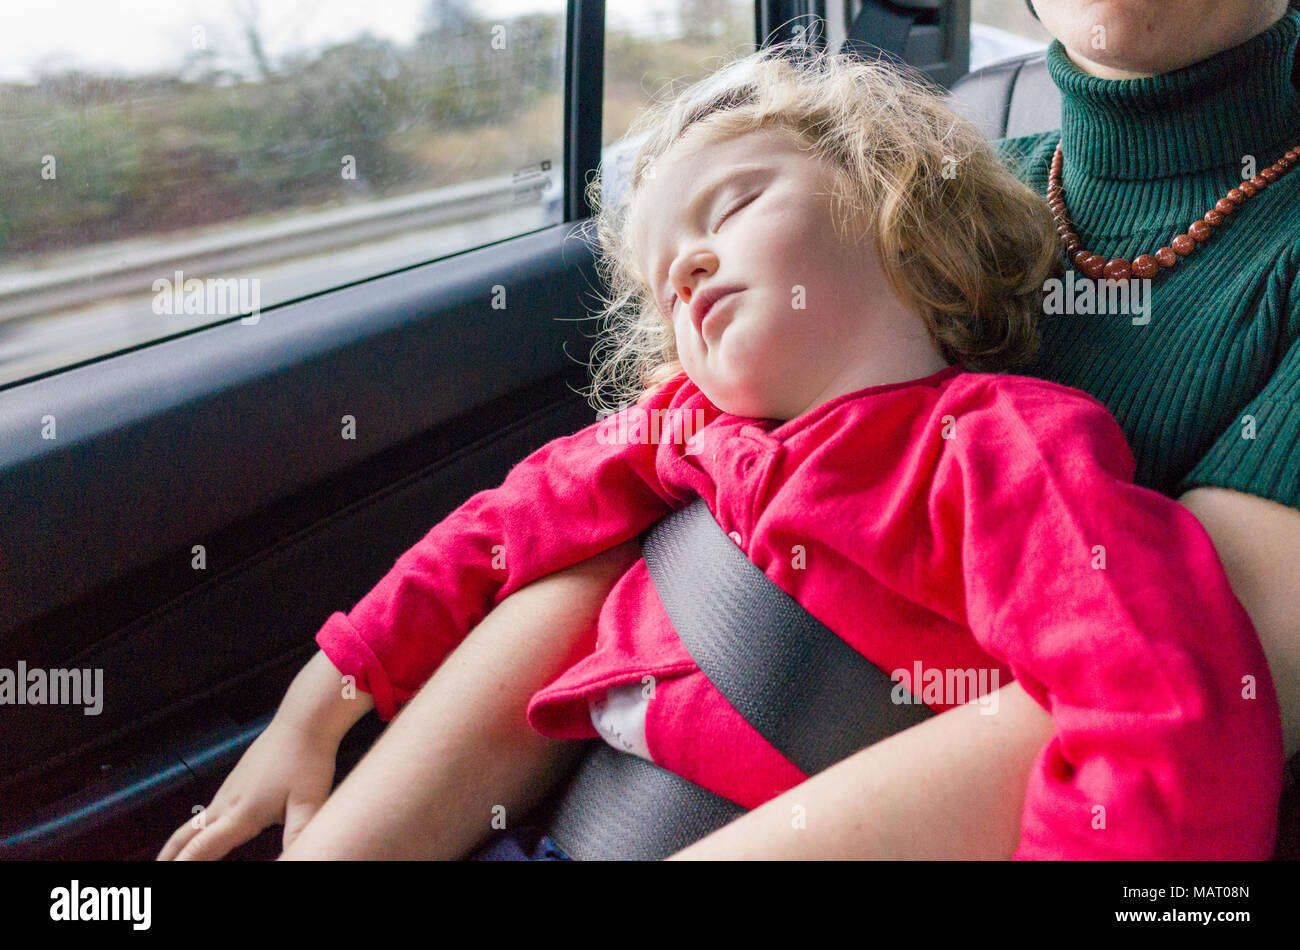 Zwei Kinder schlafen im Auto sitze Stockfotografie - Alamy